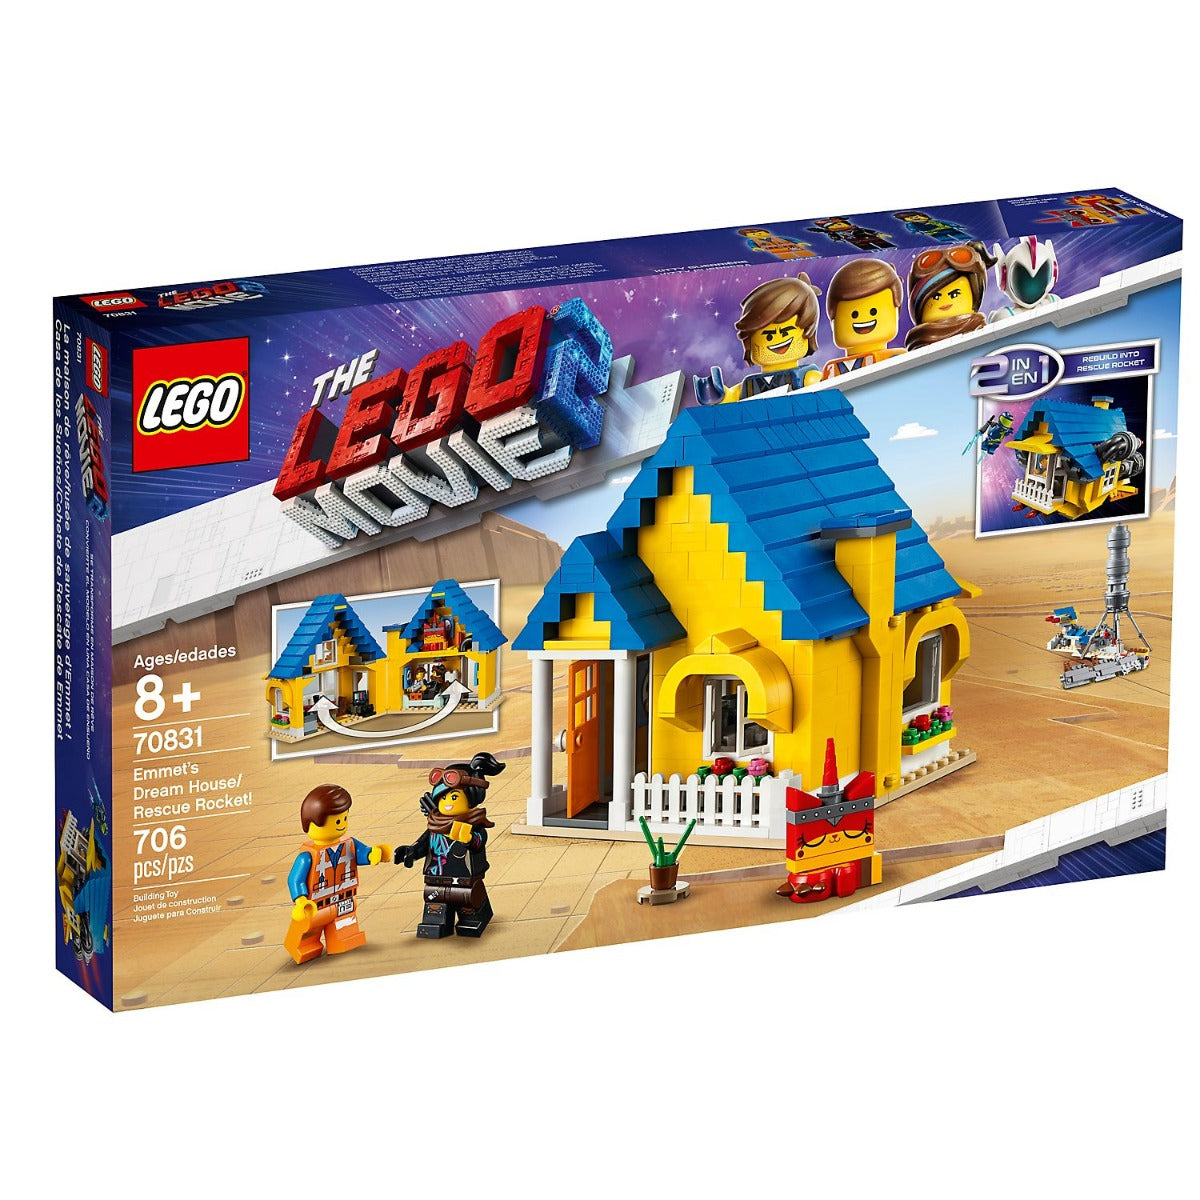 Lego Movie 2 Emmet's Dream House/Rescue Rocket 70831